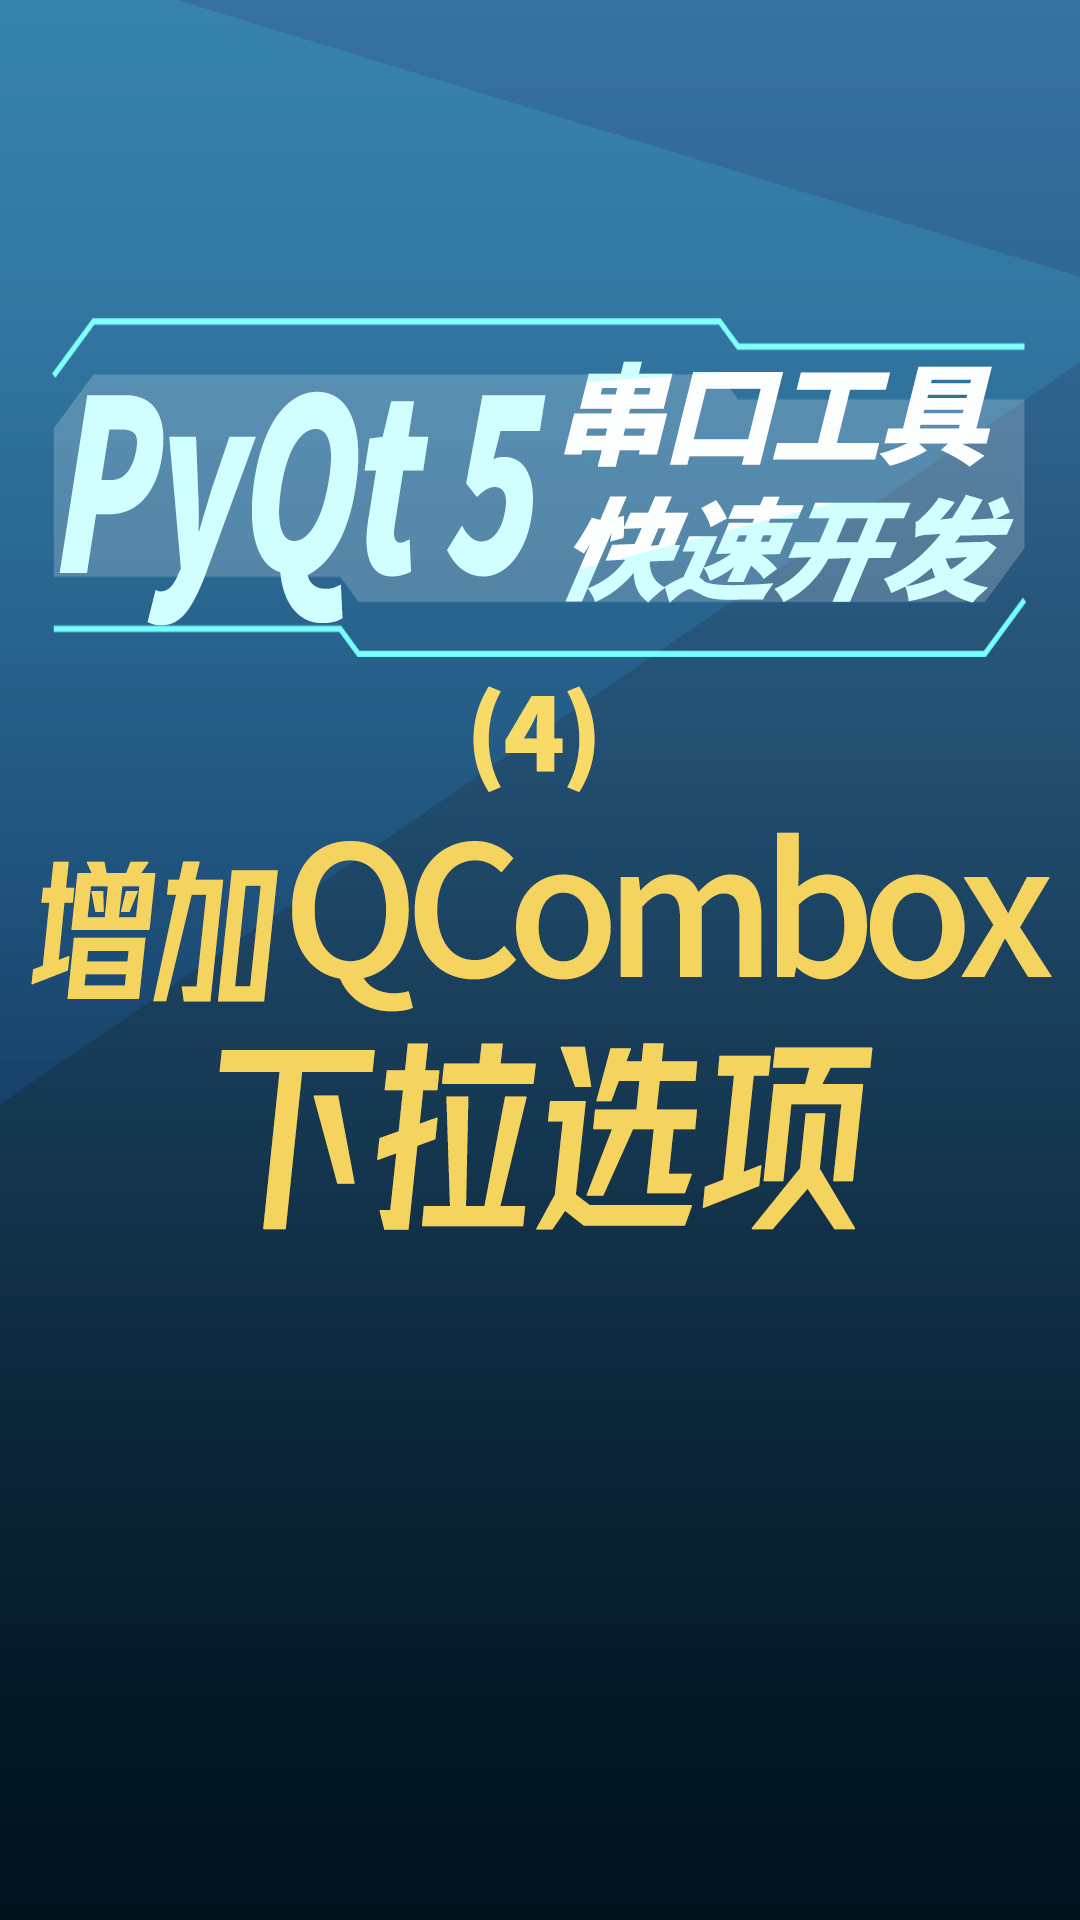 pyqt5串口工具快速开发4-增加QCombox下拉选项#串口工具开发 